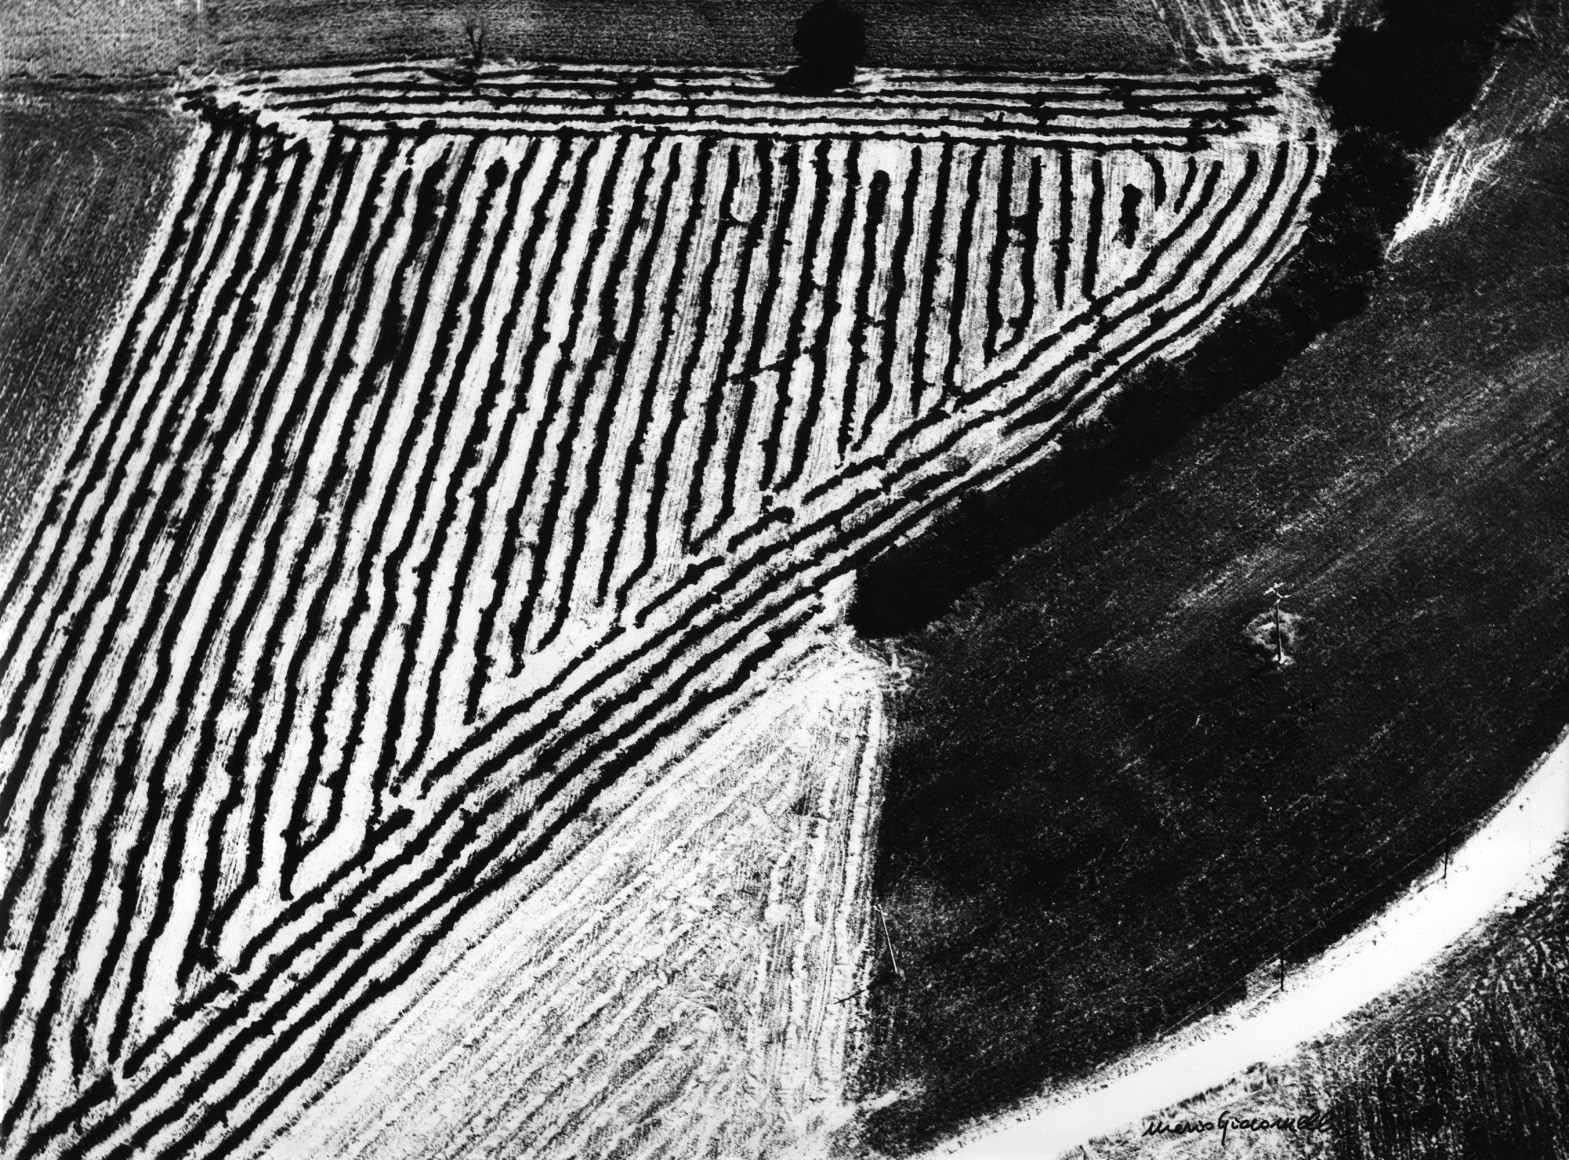 Mario Giacomelli, Presa di conscienza sulla natura, 1976/1990. Abstract landscape divided into three sections: a striped triangle in the upper left, a white triangle in the lower left, and a black square section in the lower right.